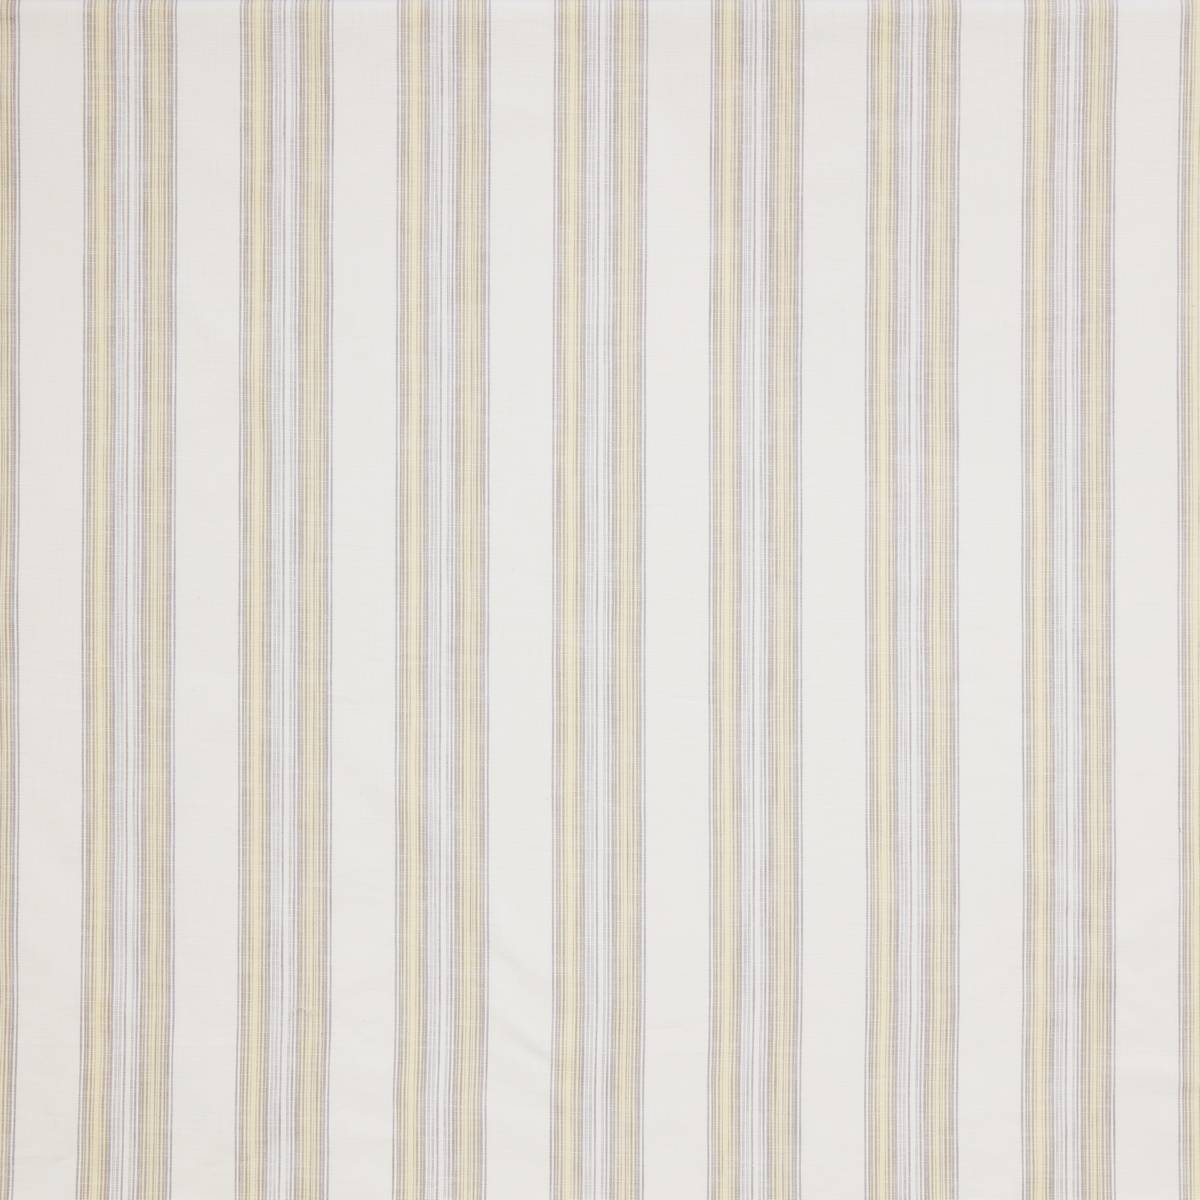 Barley Stripe Cornsilk Fabric by iLiv